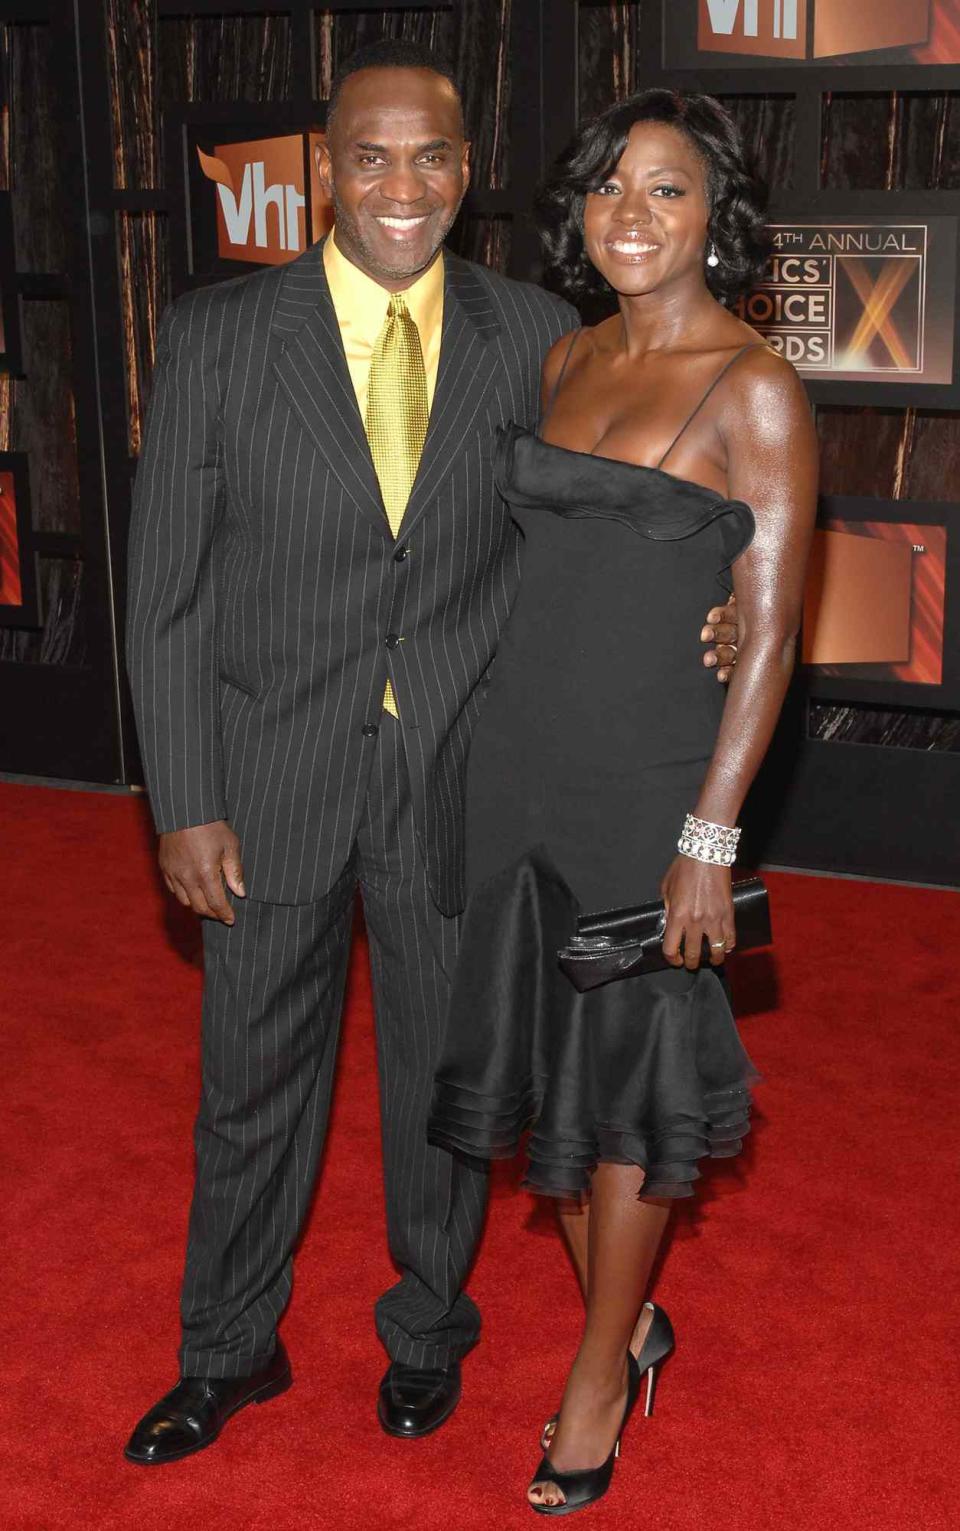 Julius Tennon and Viola Davis attend The 14th Annual Critics' Choice Awards at Santa Monica Civic Center on January 8, 2009 in Santa Monica, California